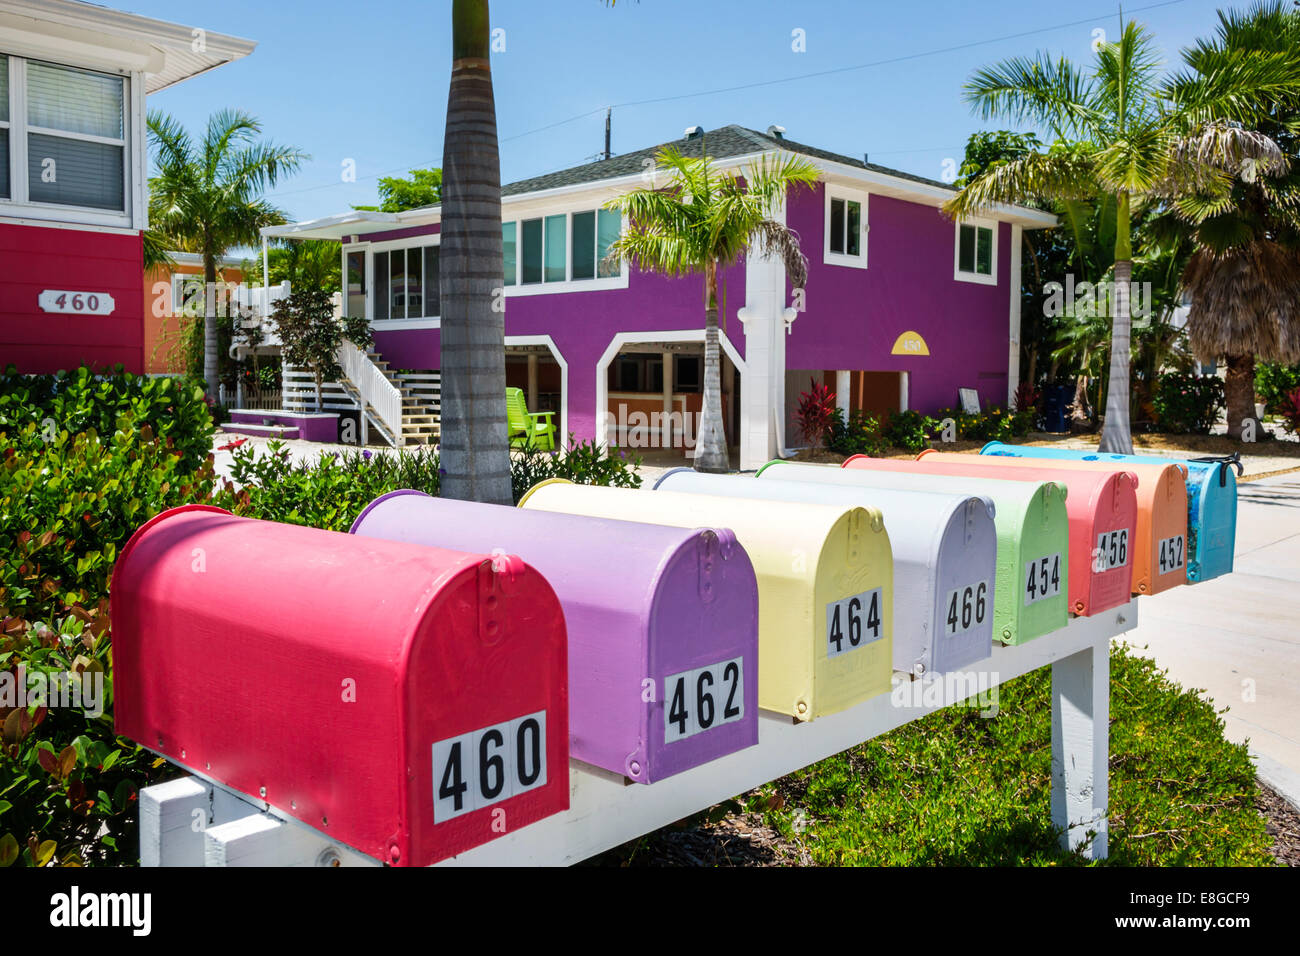 Fort ft. Myers Beach Florida, Golfo del Messico, Estero Boulevard, Cottages of Paradise Point, affitto, cottage, colorato, mailbox, visitatori viaggio a. Foto Stock